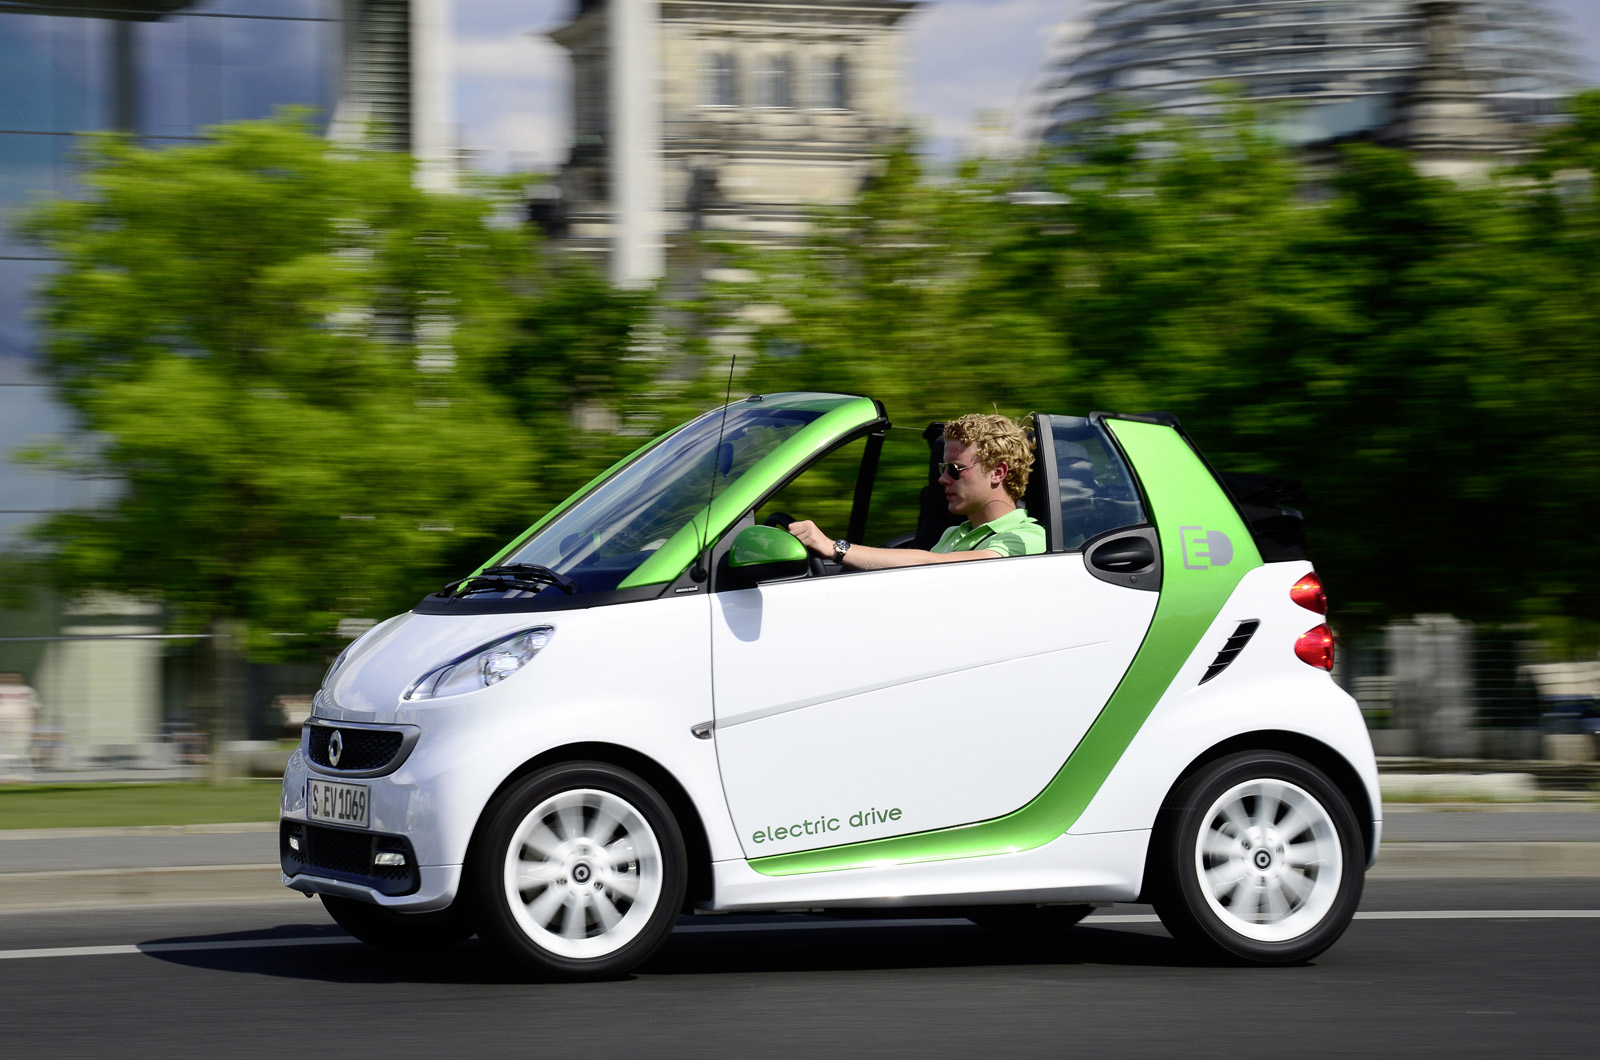 Smart ForTwo Brabus Electric Drive: Geneva 2012 Photo Gallery